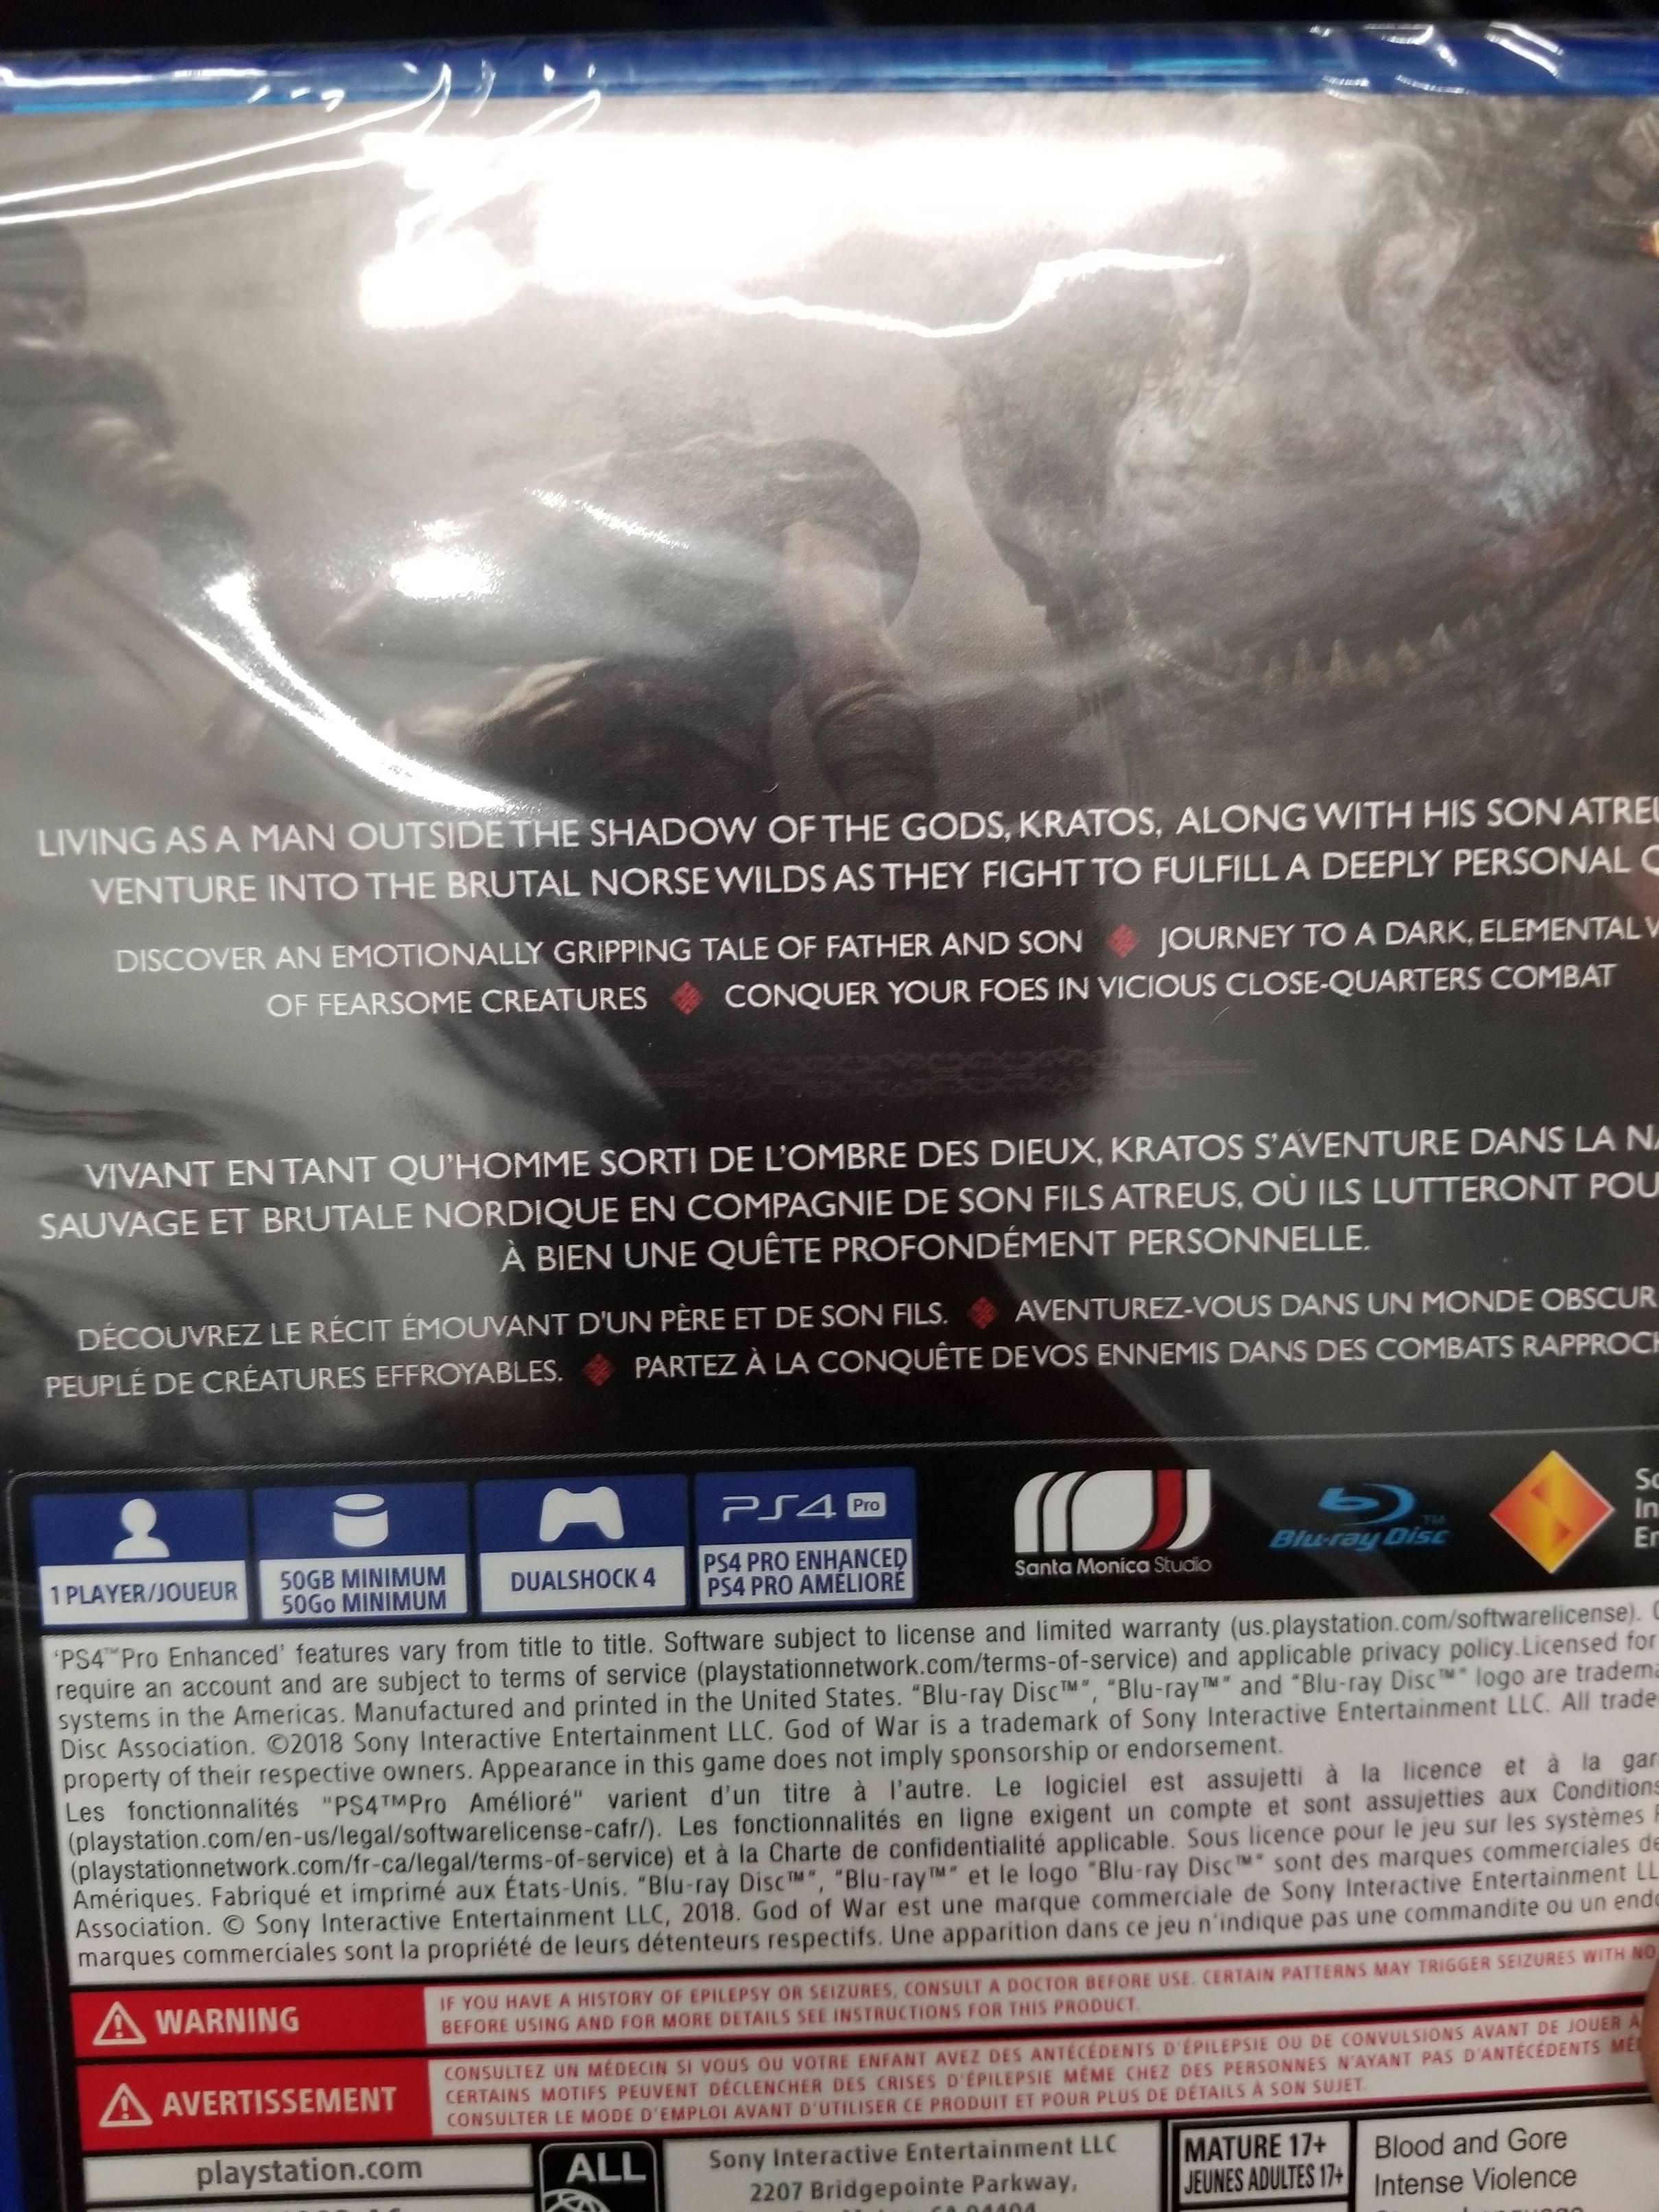 Retail Copies of God of War Leaked 2 Weeks Before Release